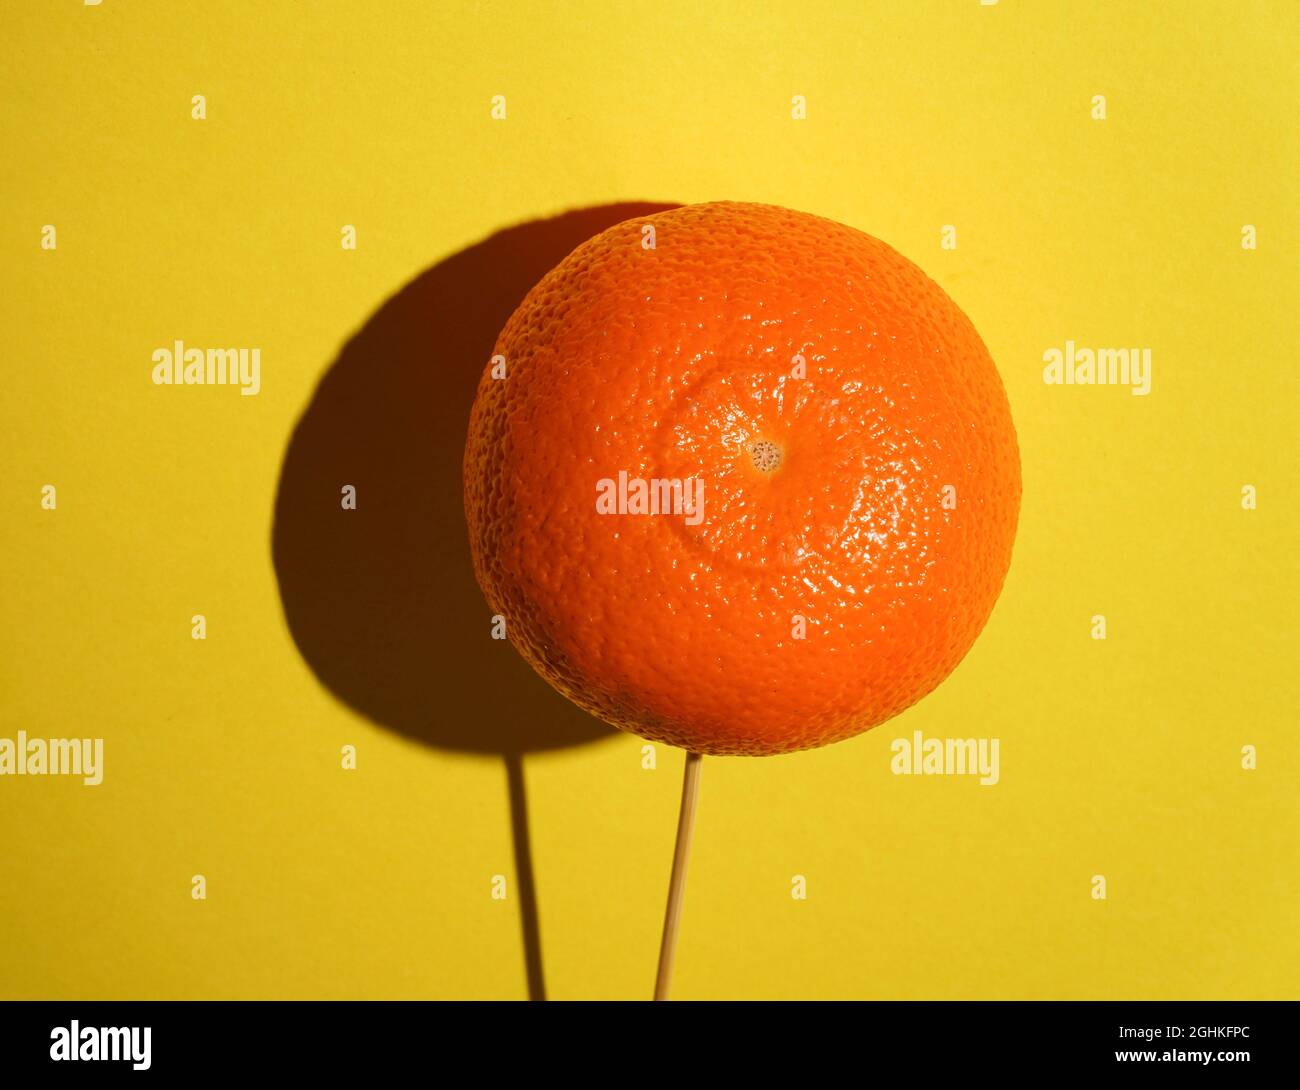 Ripe juicy orange mandarine tangerine as fruit Candy lollipop on bright yellow background with deep hard shadow. Stock Photo